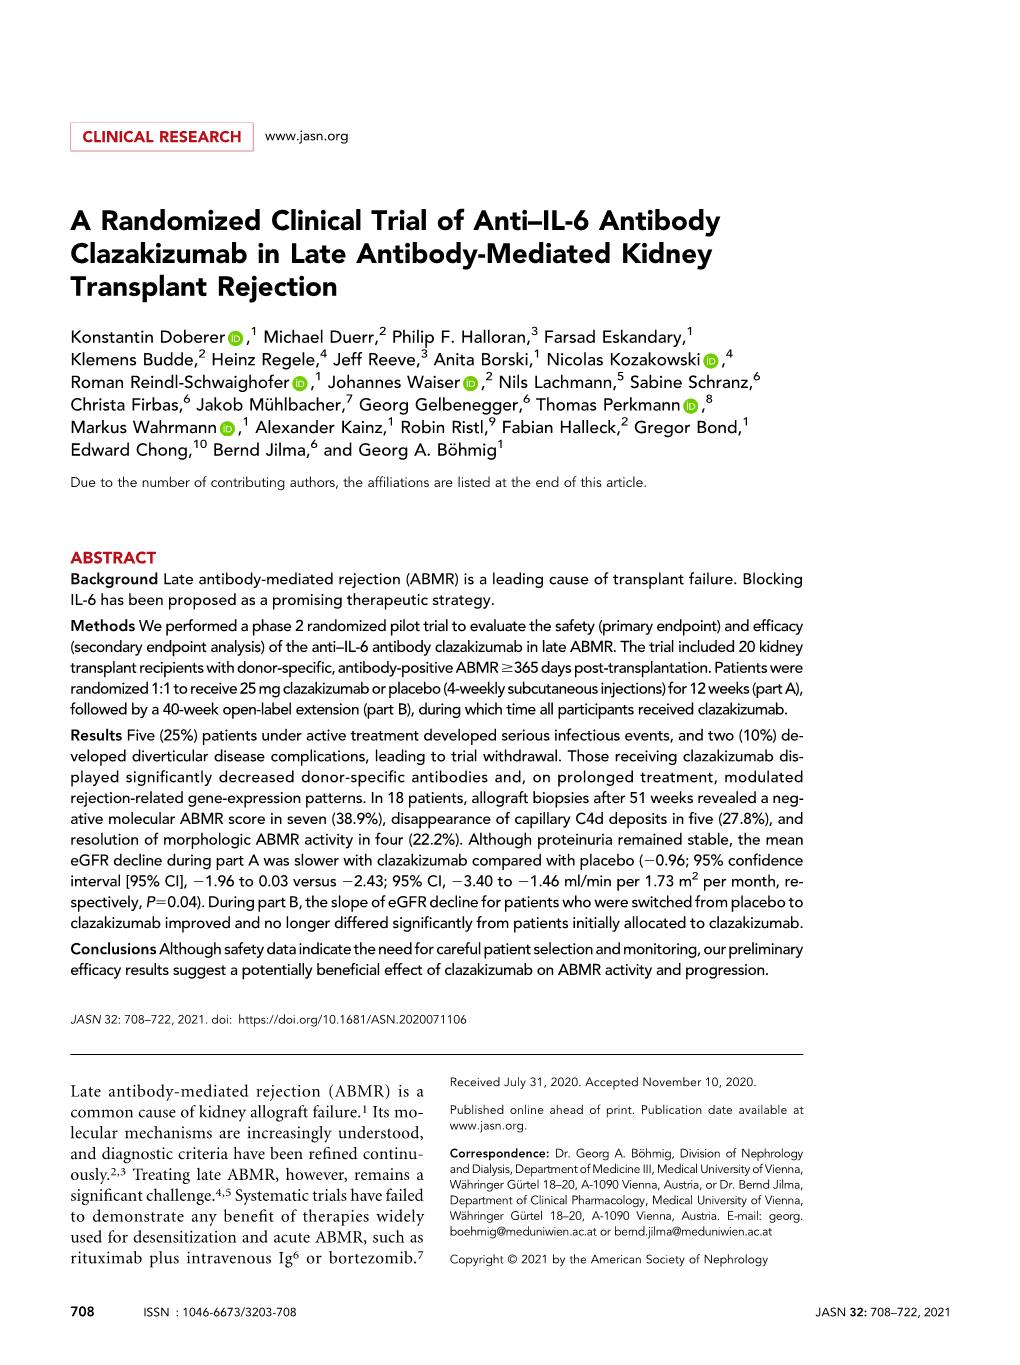 A Randomized Clinical Trial of Anti–IL-6 Antibody Clazakizumab in Late Antibody-Mediated Kidney Transplant Rejection